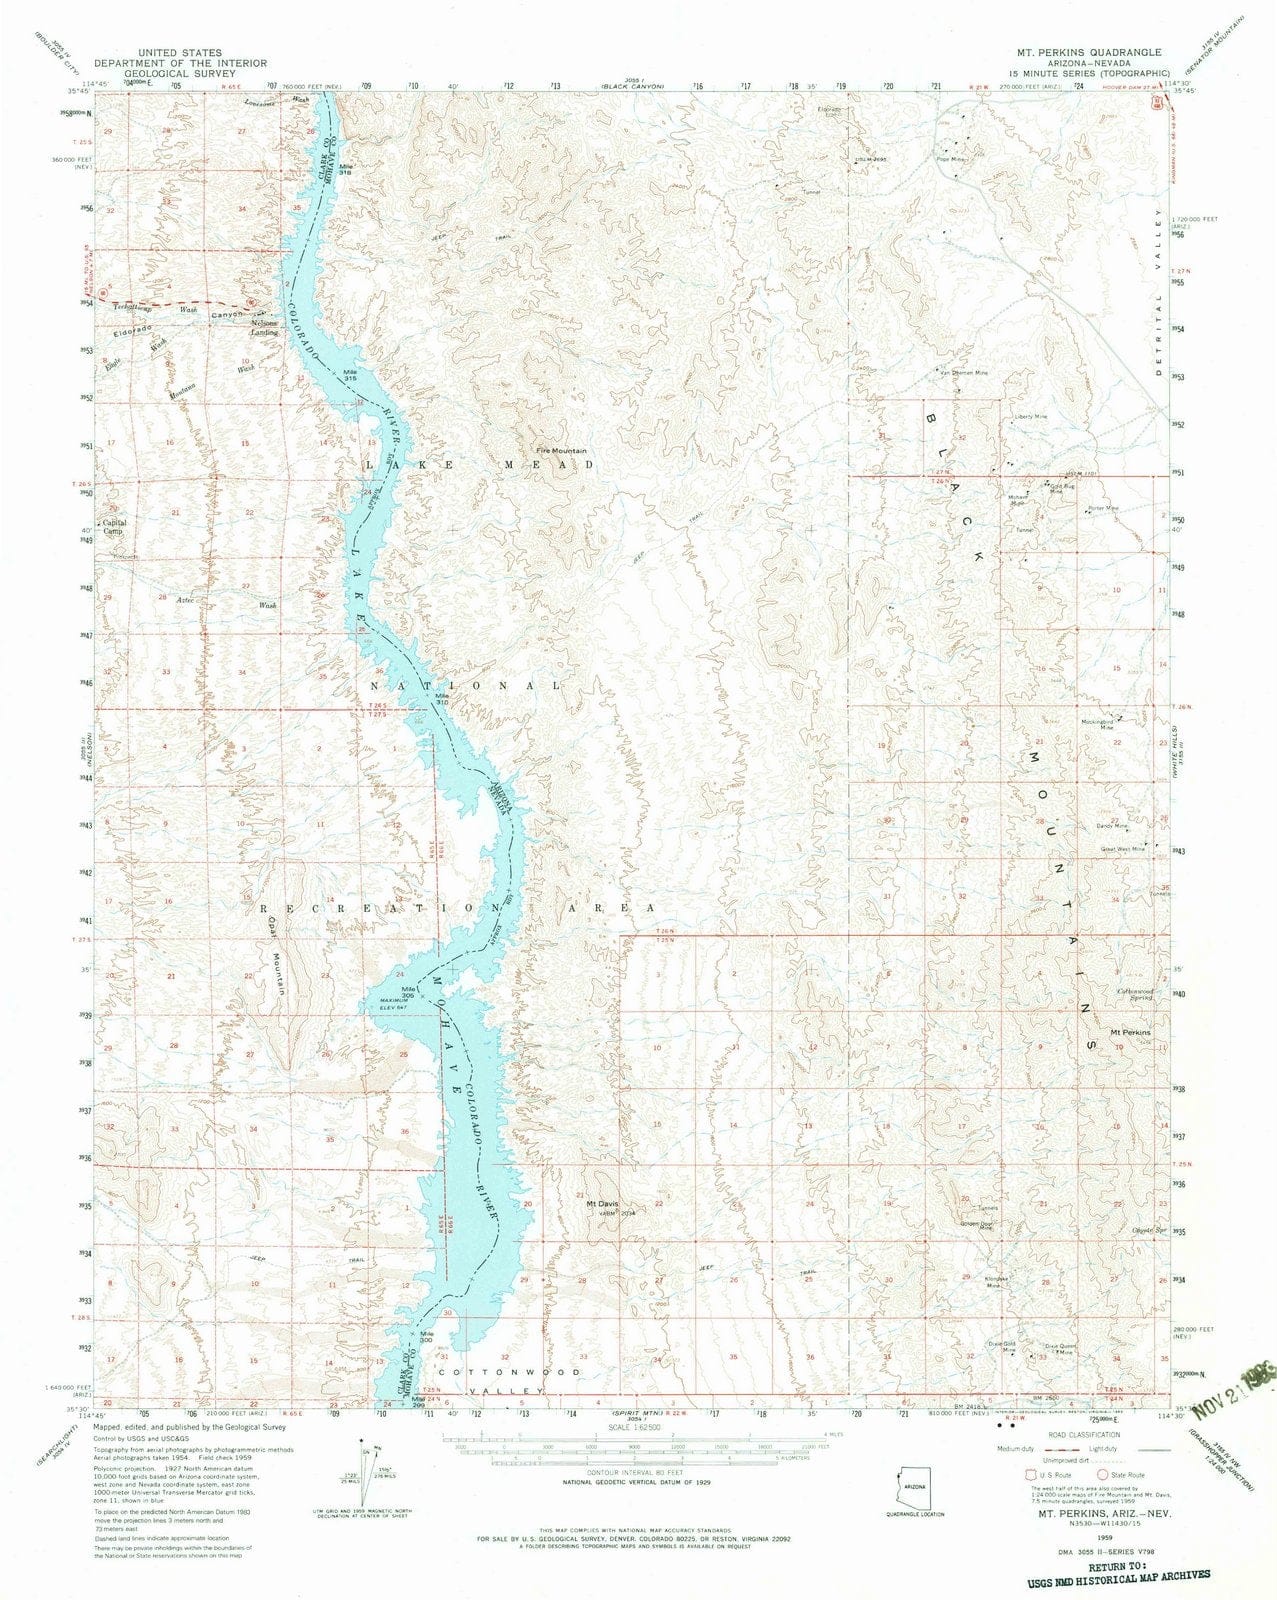 1959 Mt. Perkins, AZ - Arizona - USGS Topographic Map